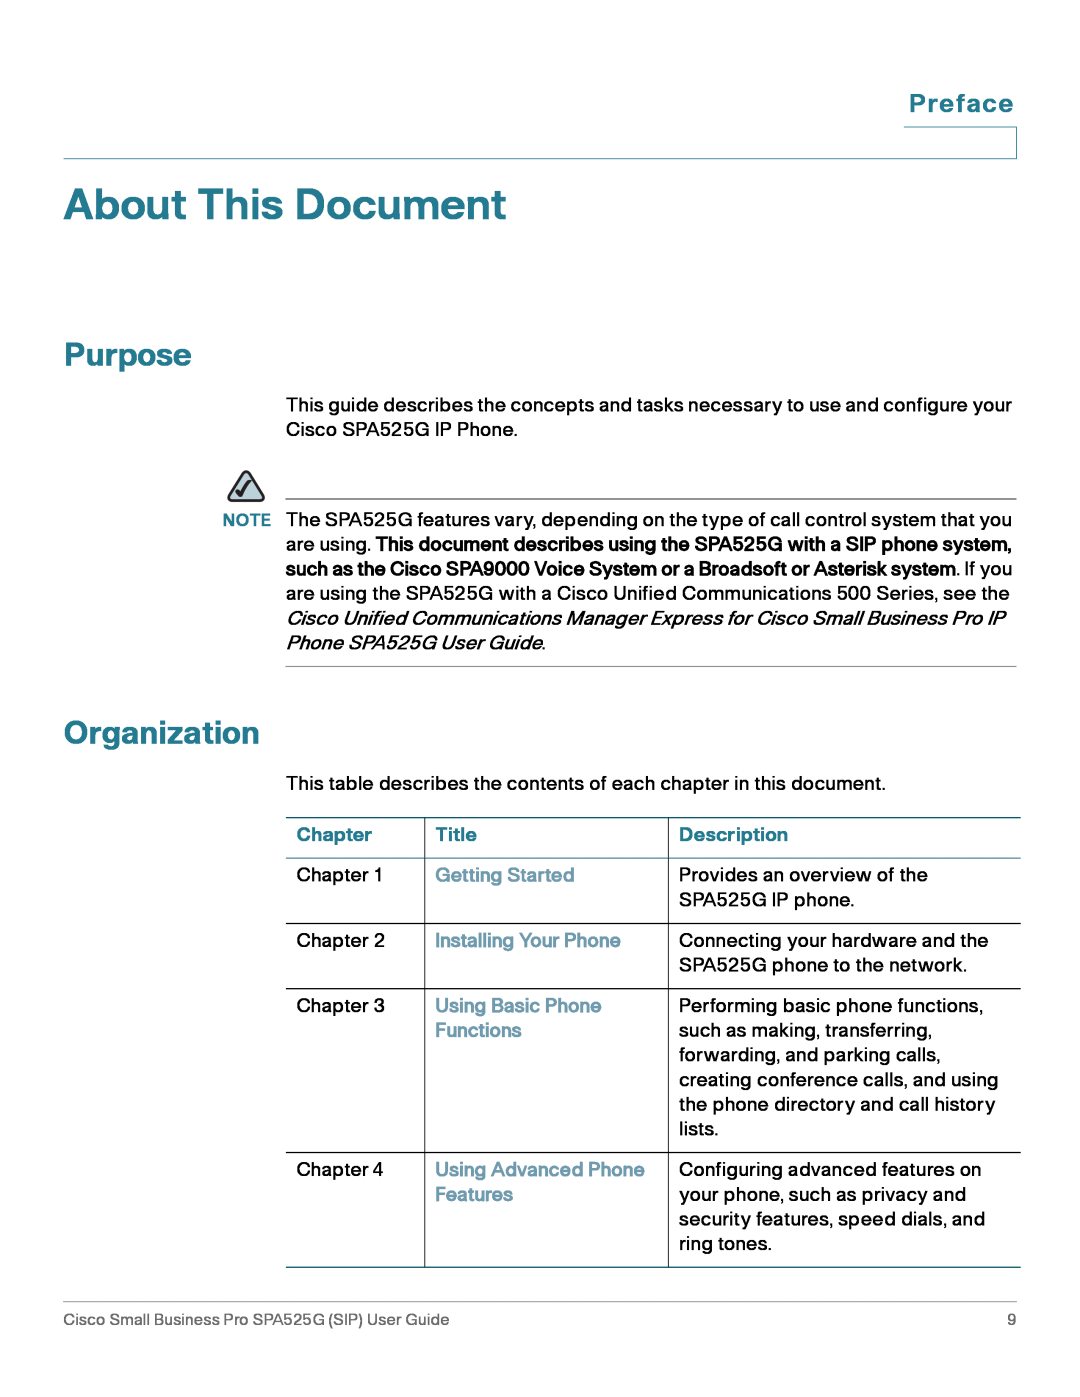 Cisco Systems SPA525G manual About This Document, Purpose, Organization, Preface, Chapter, Title, Description 